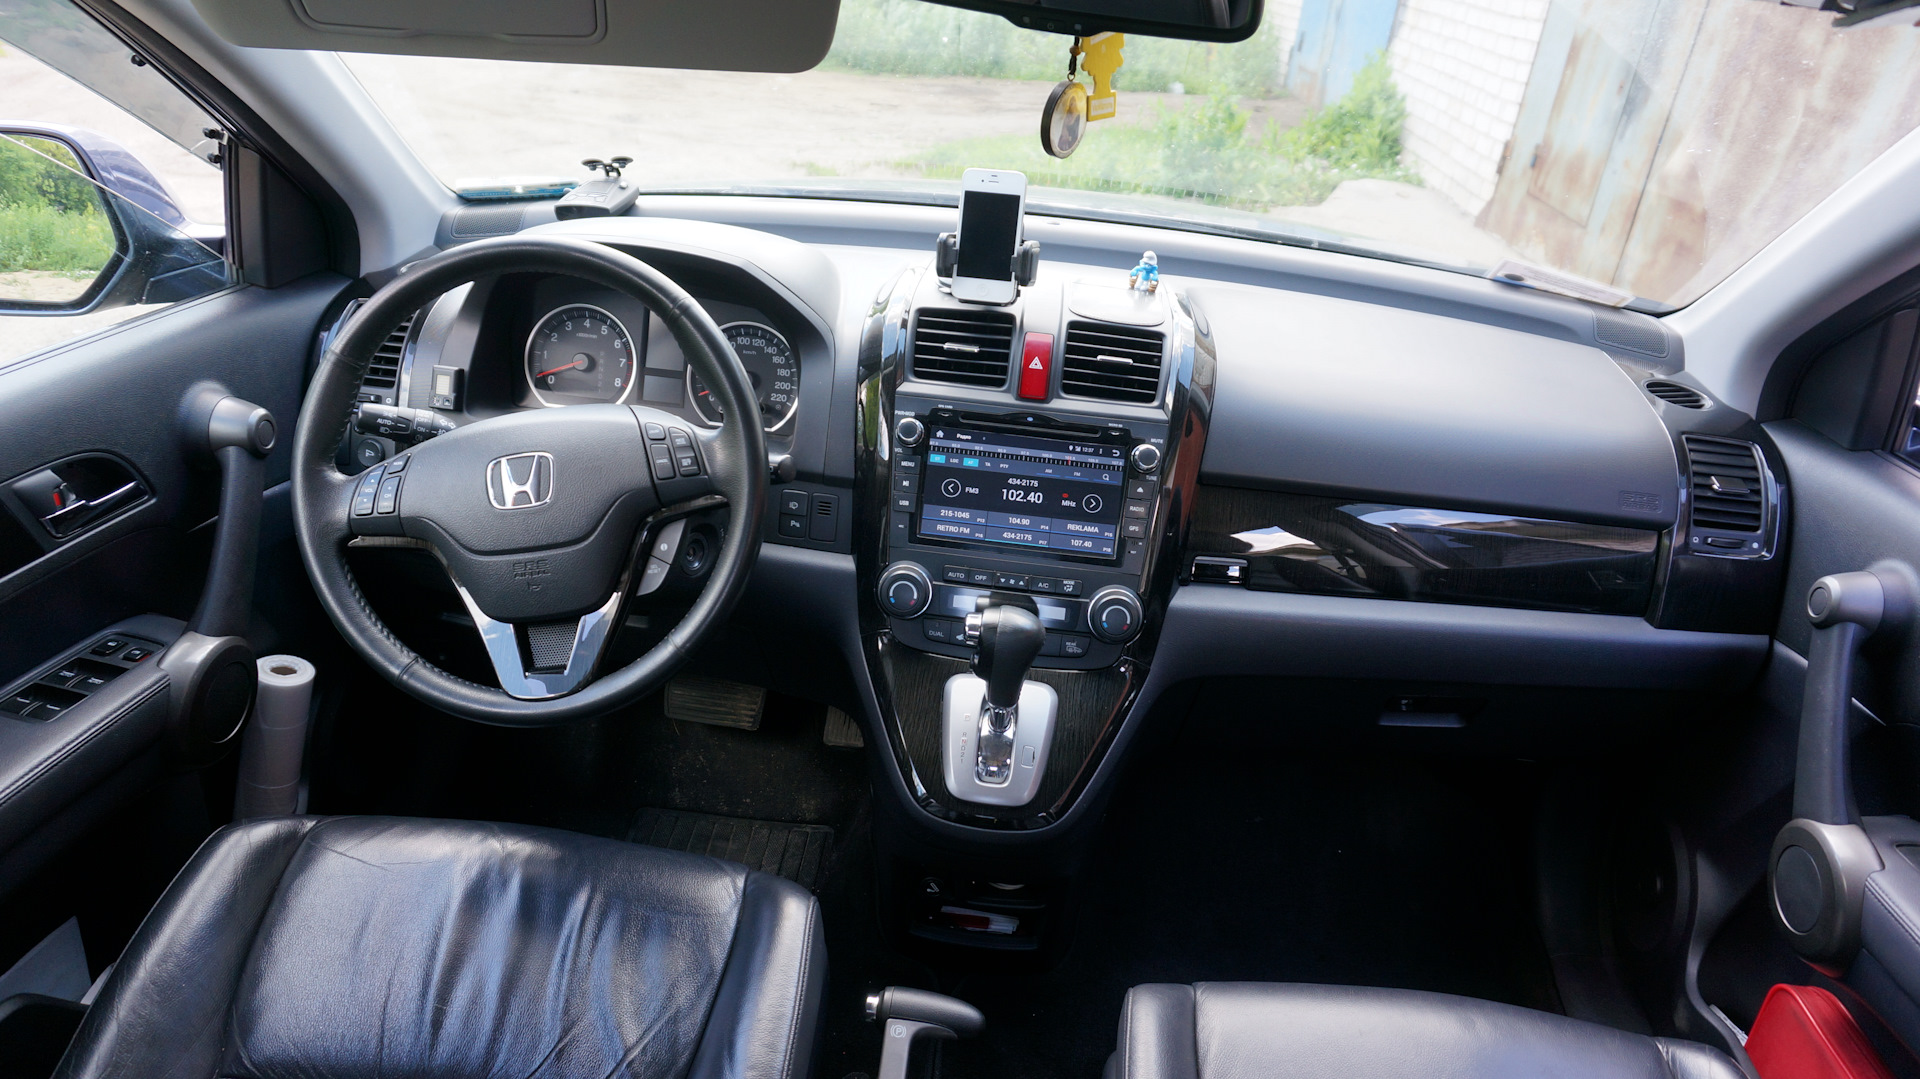  Honda CR-V   2  Honda CR-V RE 24  2011      DRIVE2